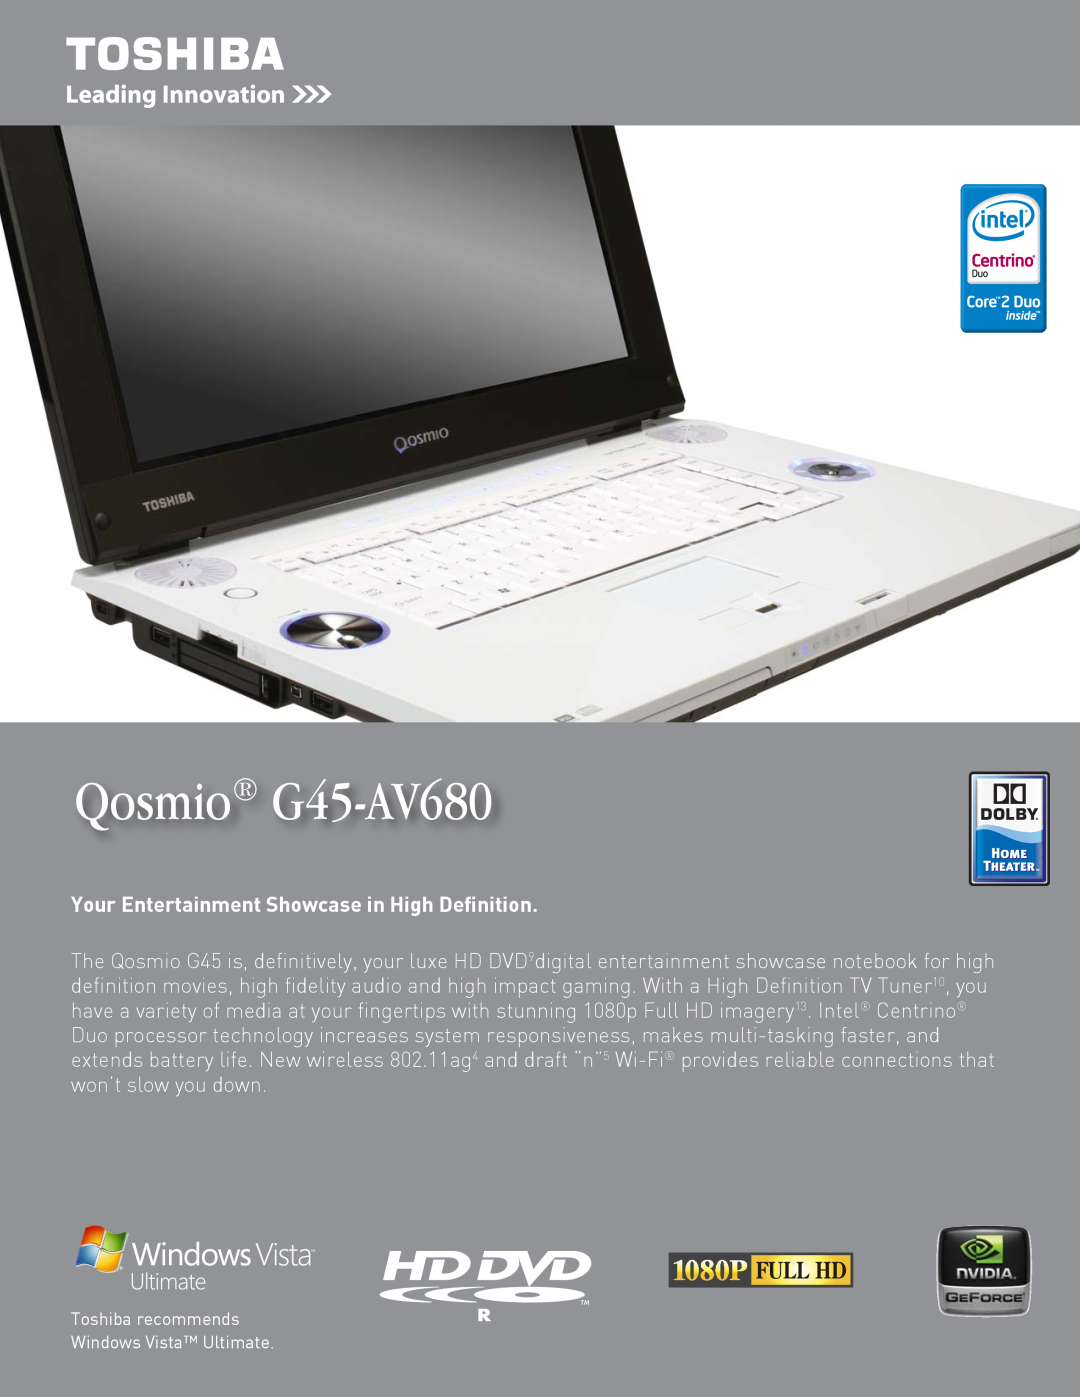 Toshiba manual Qosmio G45-AV680, Your Entertainment Showcase in High Deﬁnition 